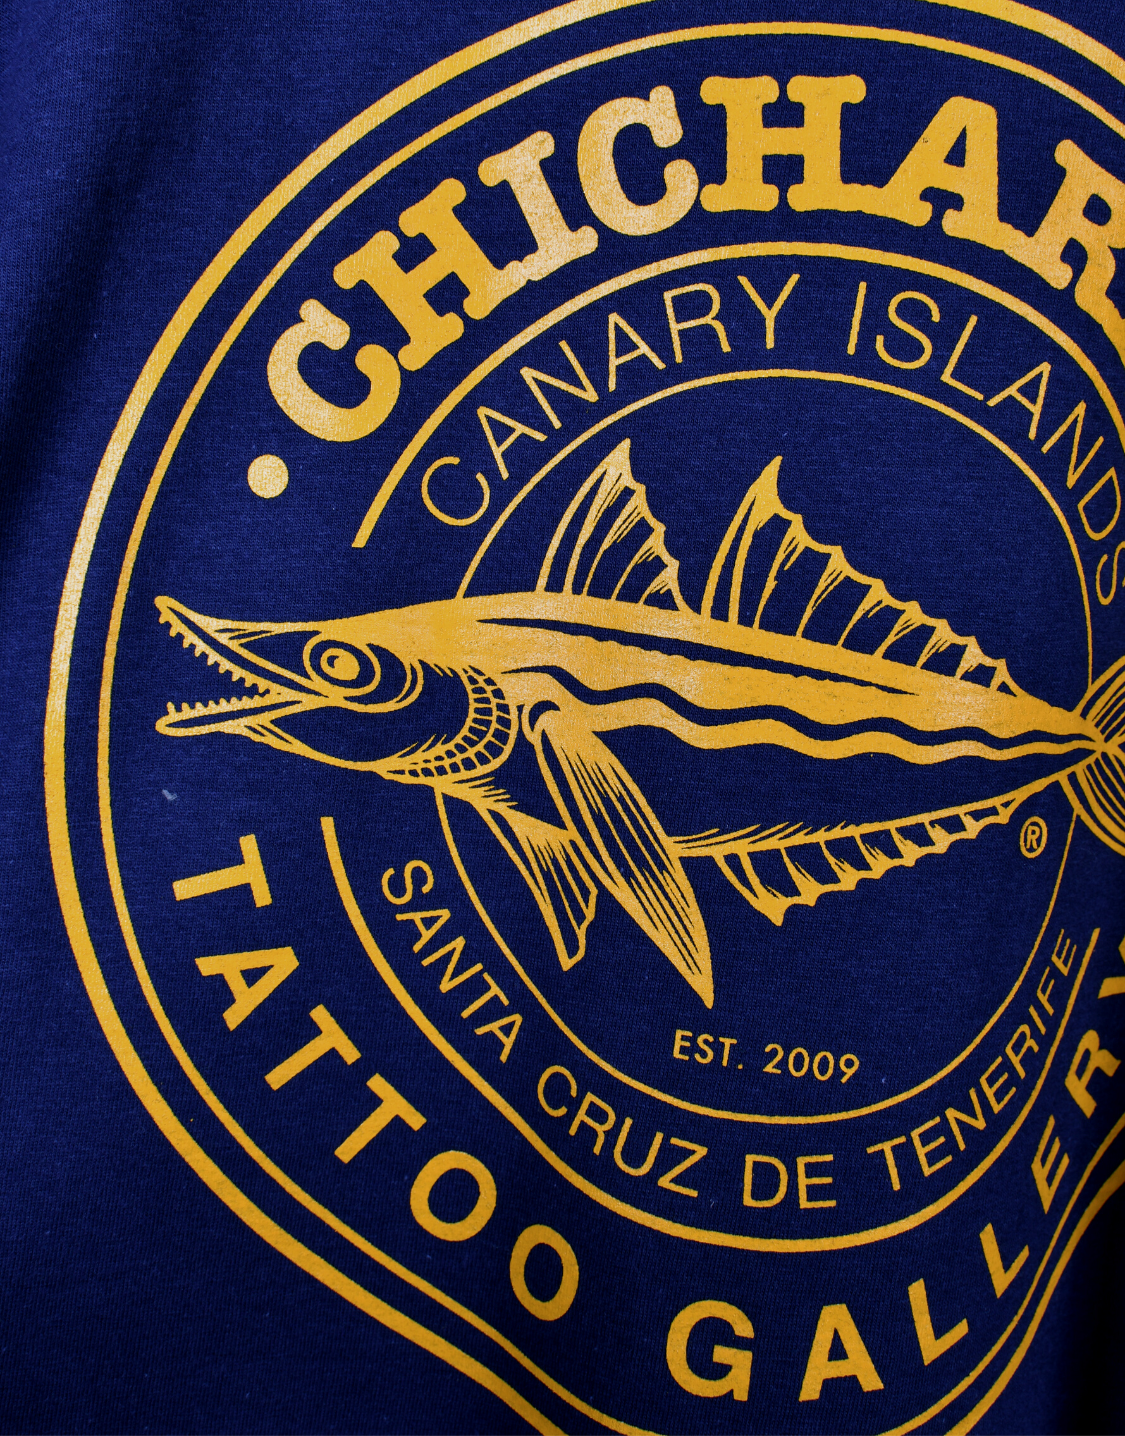 Camiseta Navy/Amarilla  Chicharro Tattoo Gallery